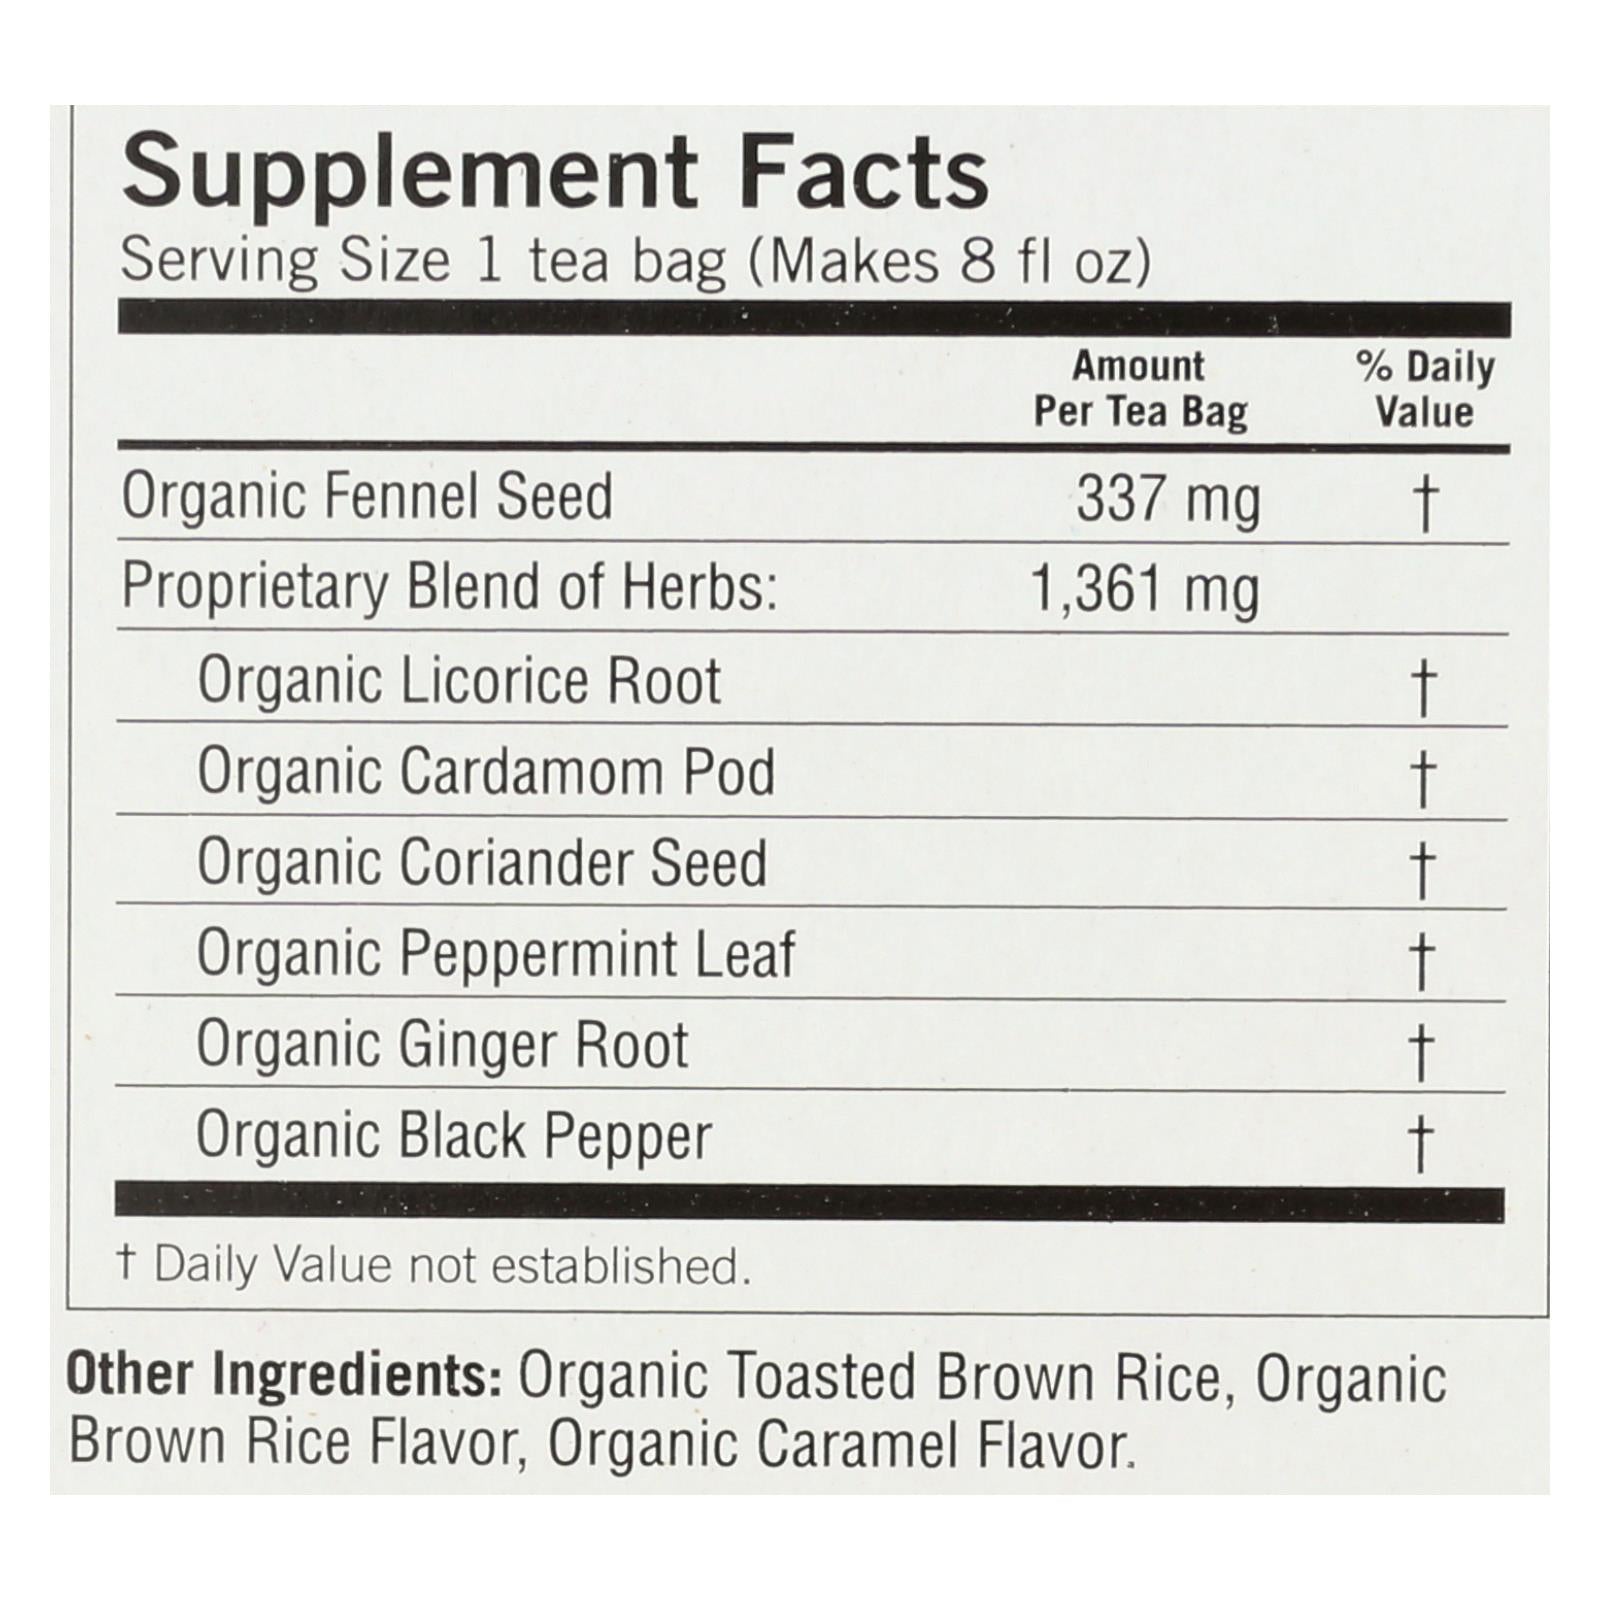 Yogi Organic Stomach Ease Herbal Tea - 16 Tea Bags - Case Of 6